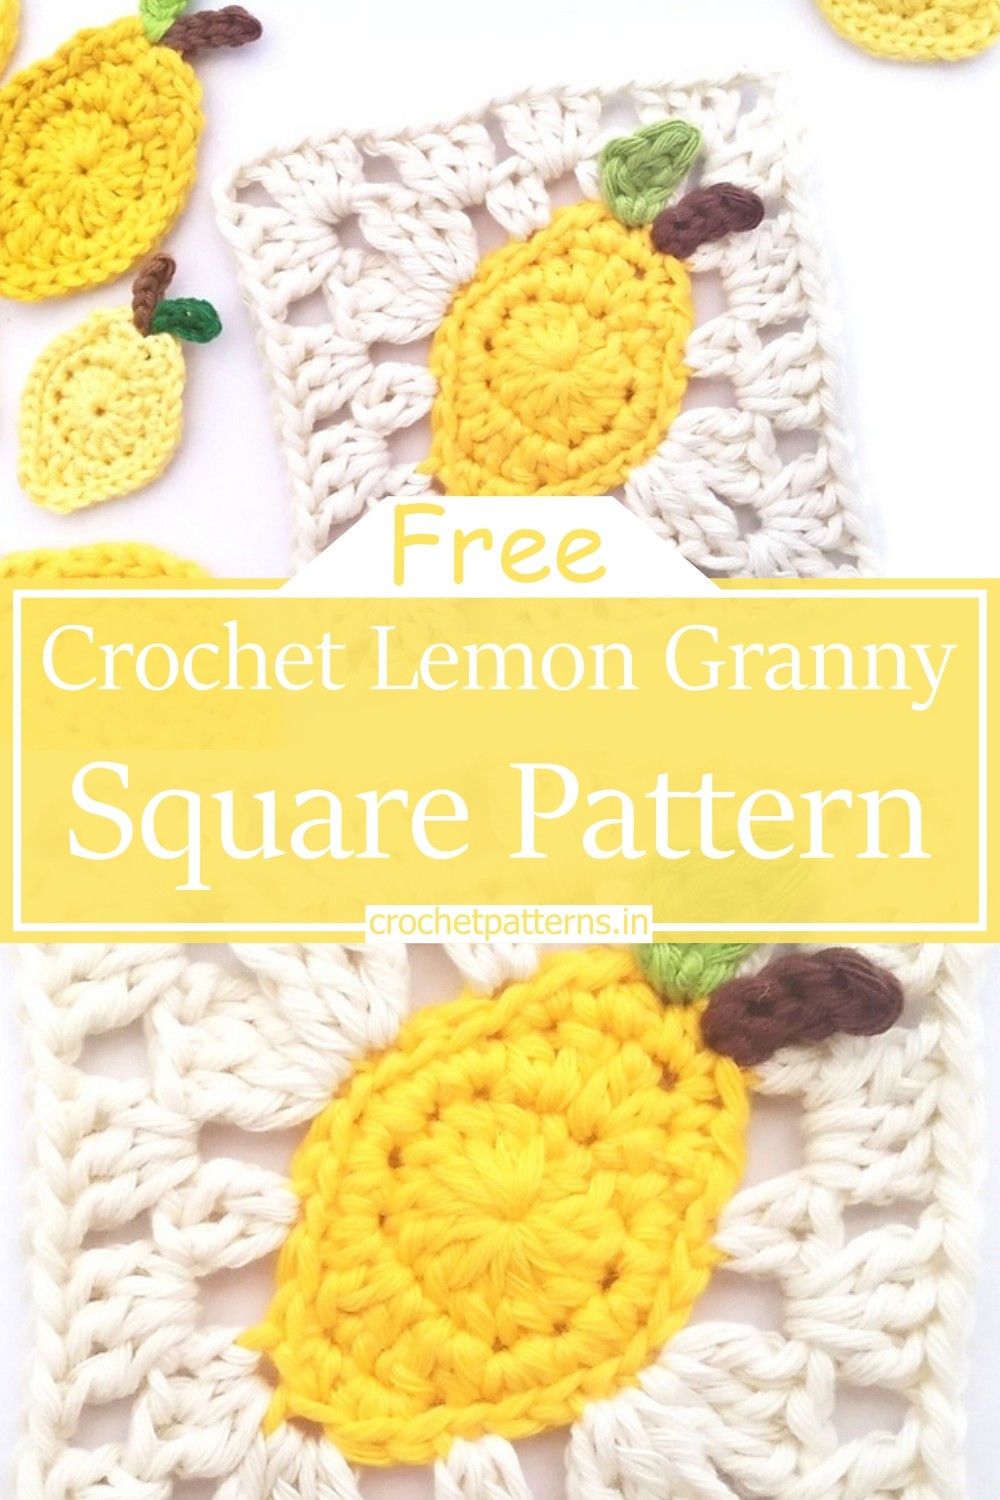 Crochet Lemon Granny Square Pattern